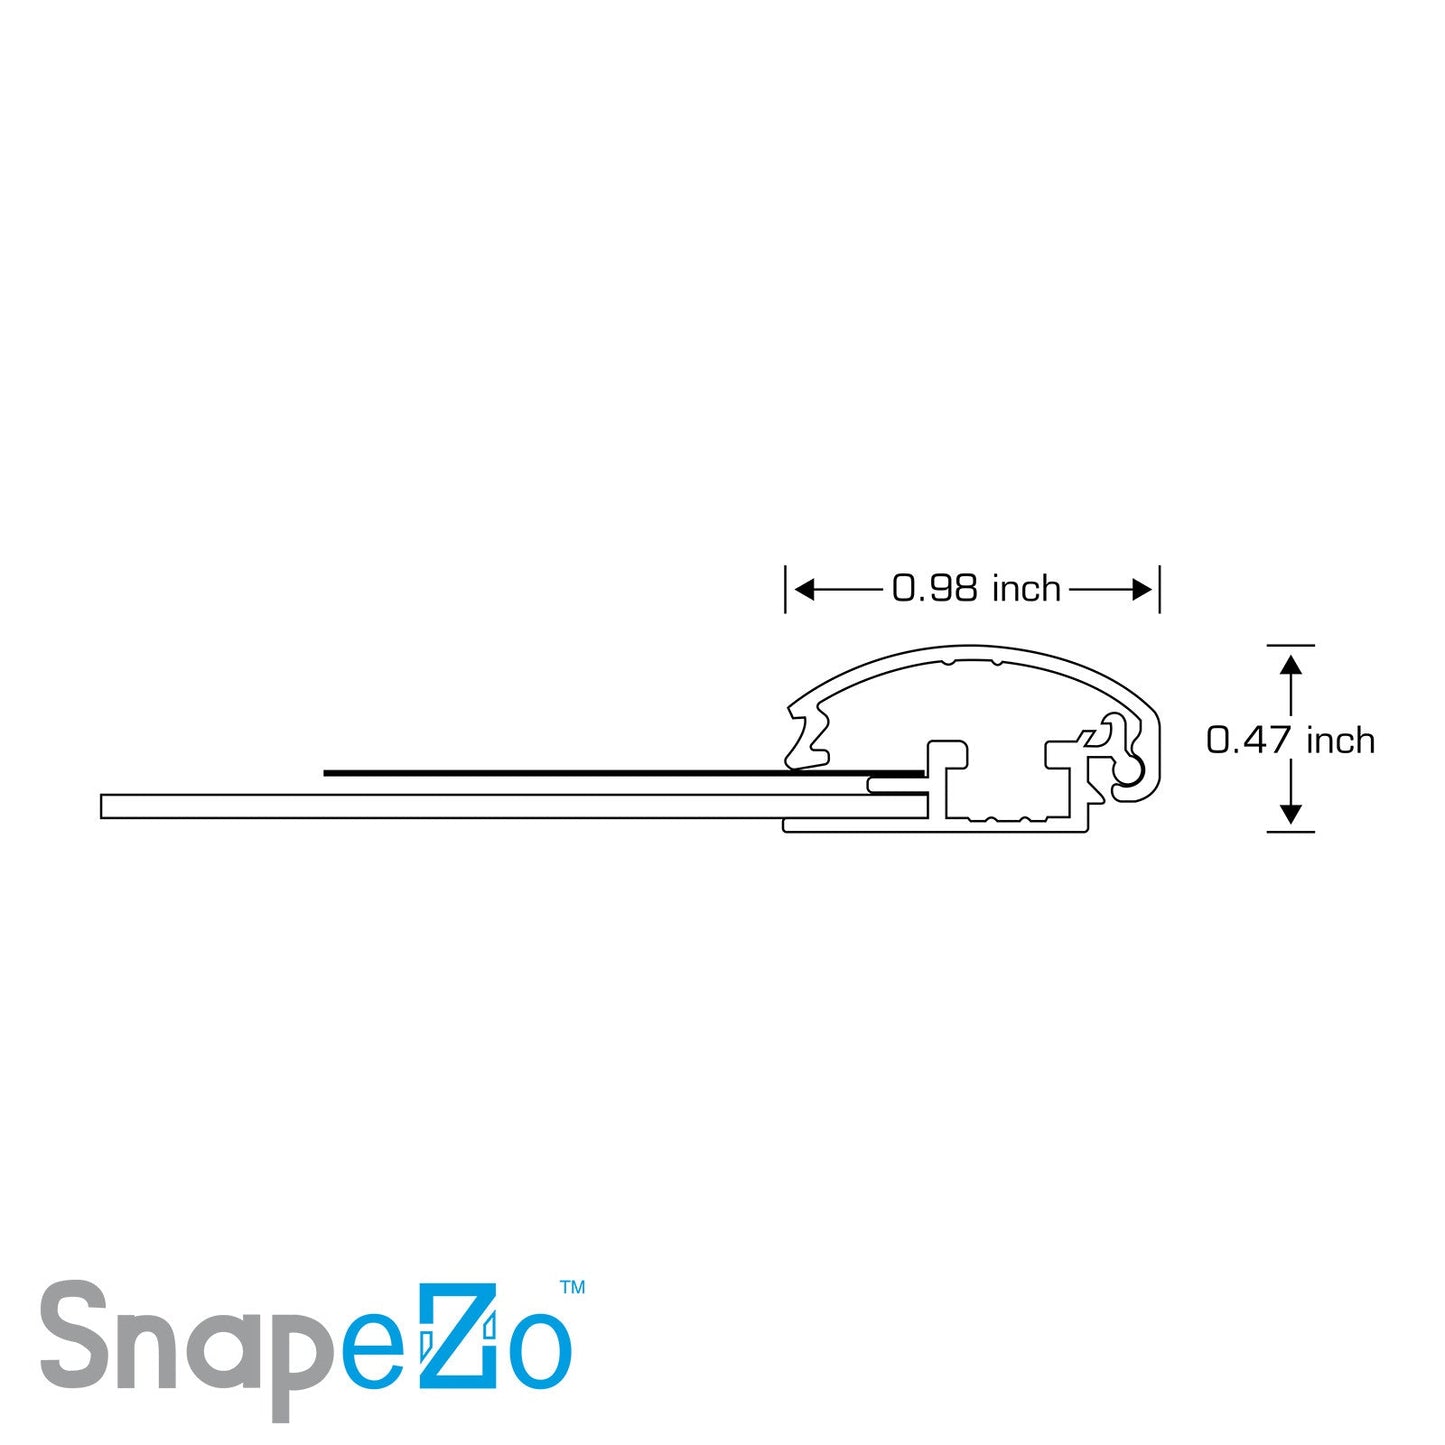 24x30 Black SnapeZo® Snap Frame - 1" Profile